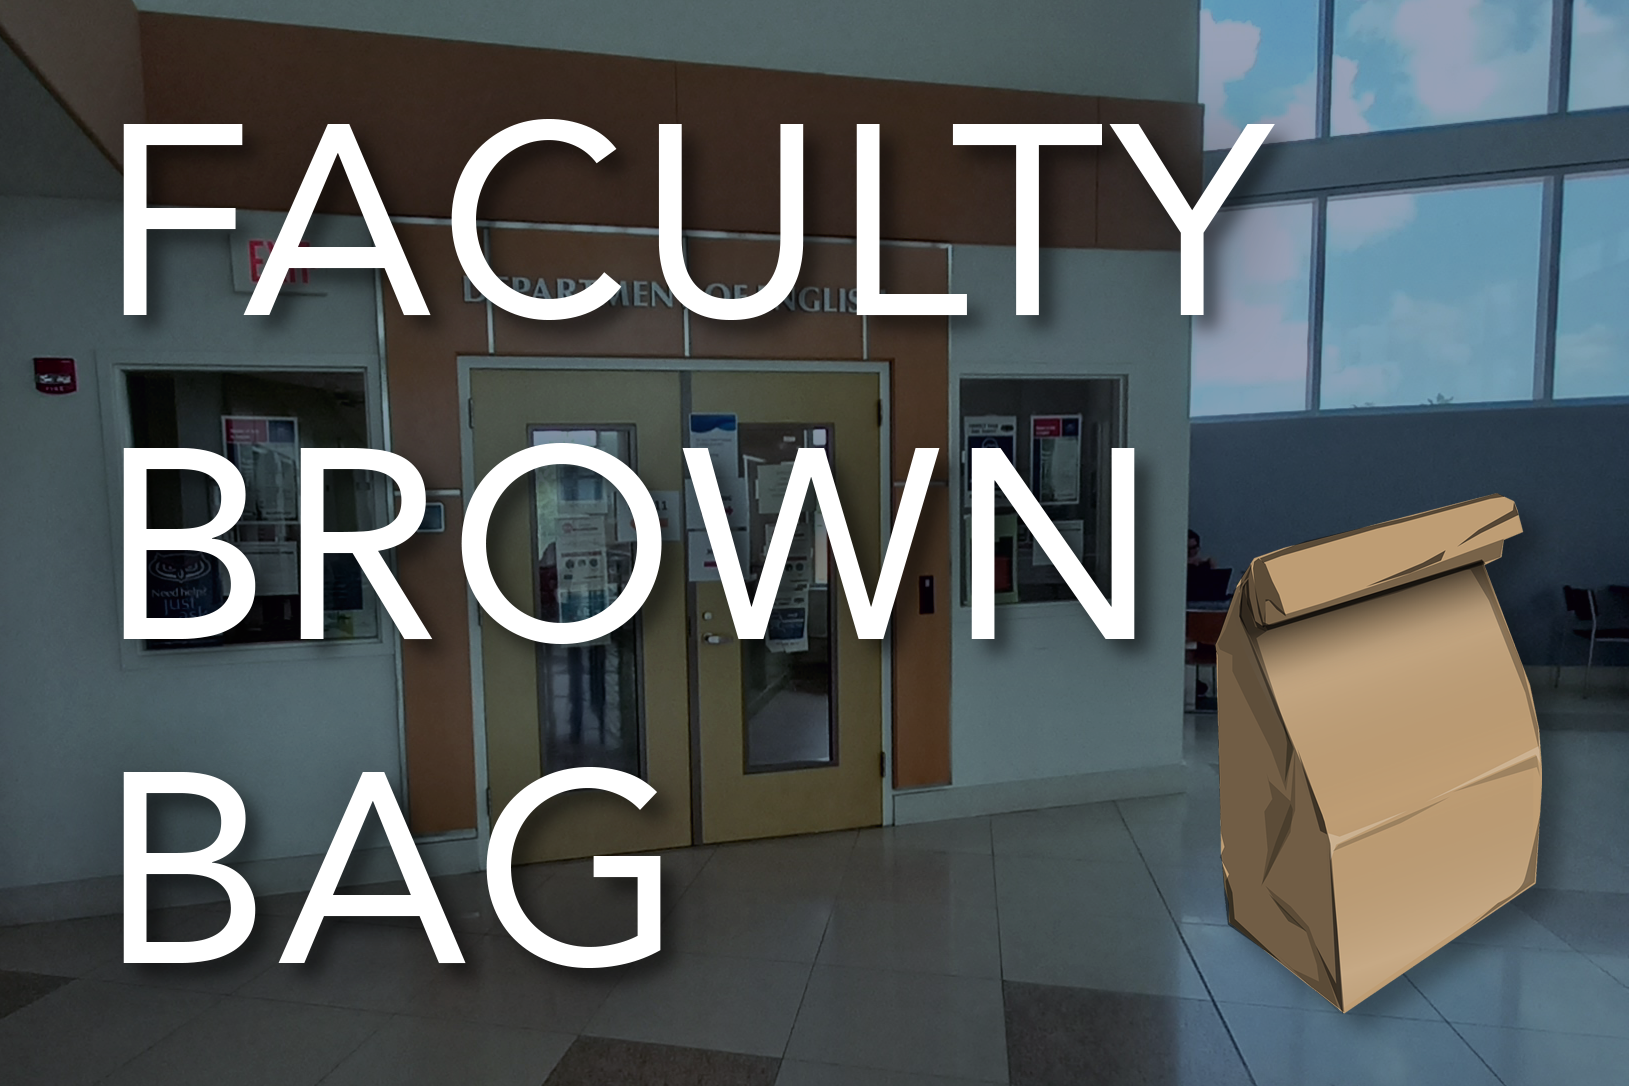 faculty brown bag talk